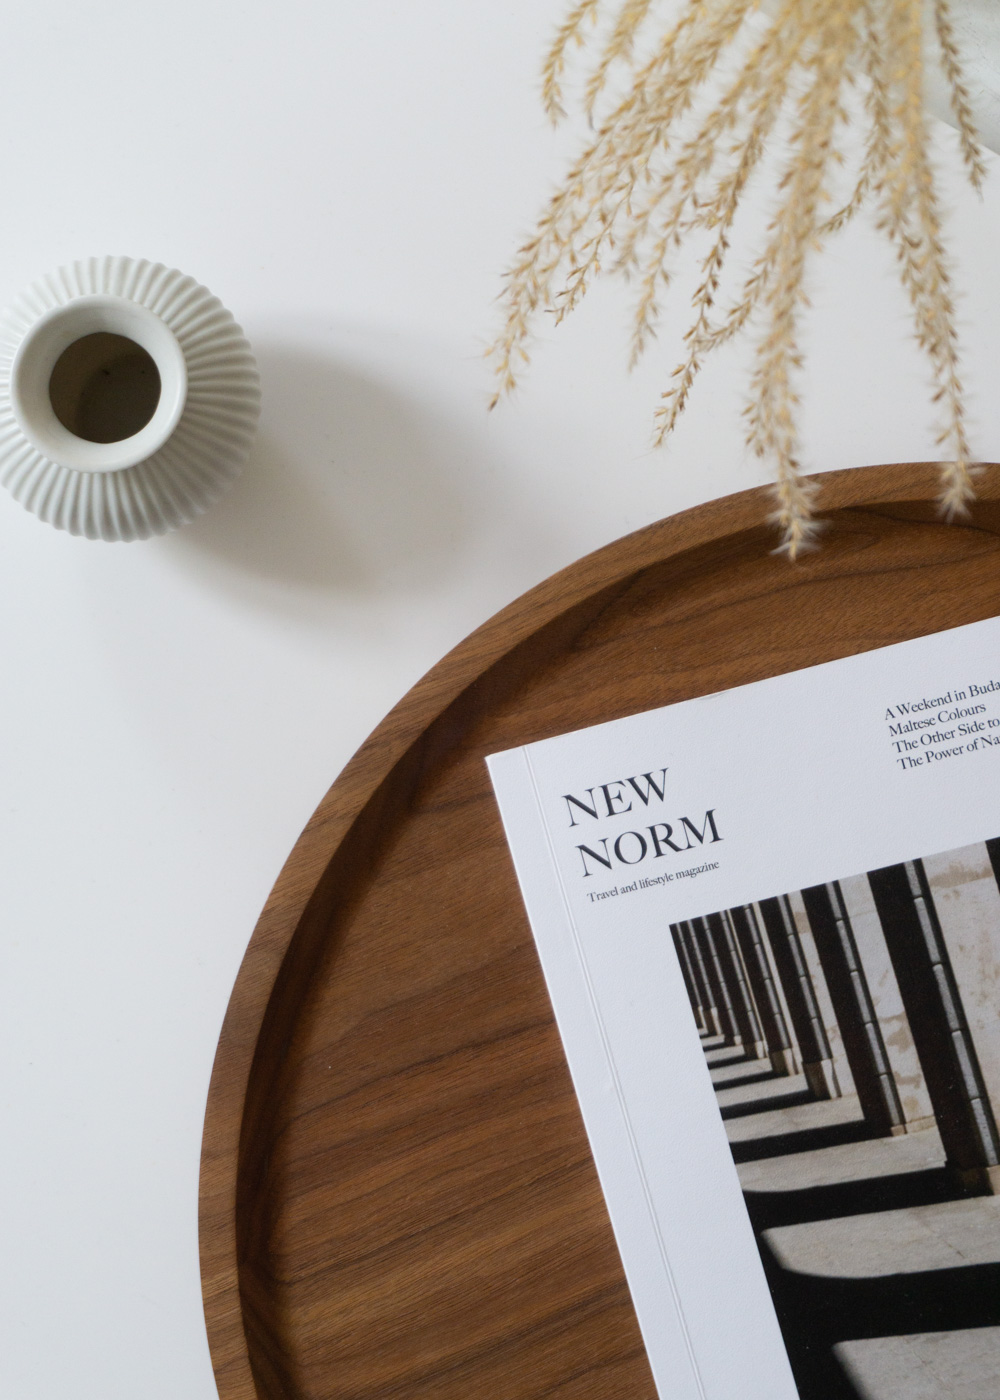 New Norm | Travel, Design, and Lifestyle Magazine | Minimalist Scandinavian Interior Details, RG Daily Blog